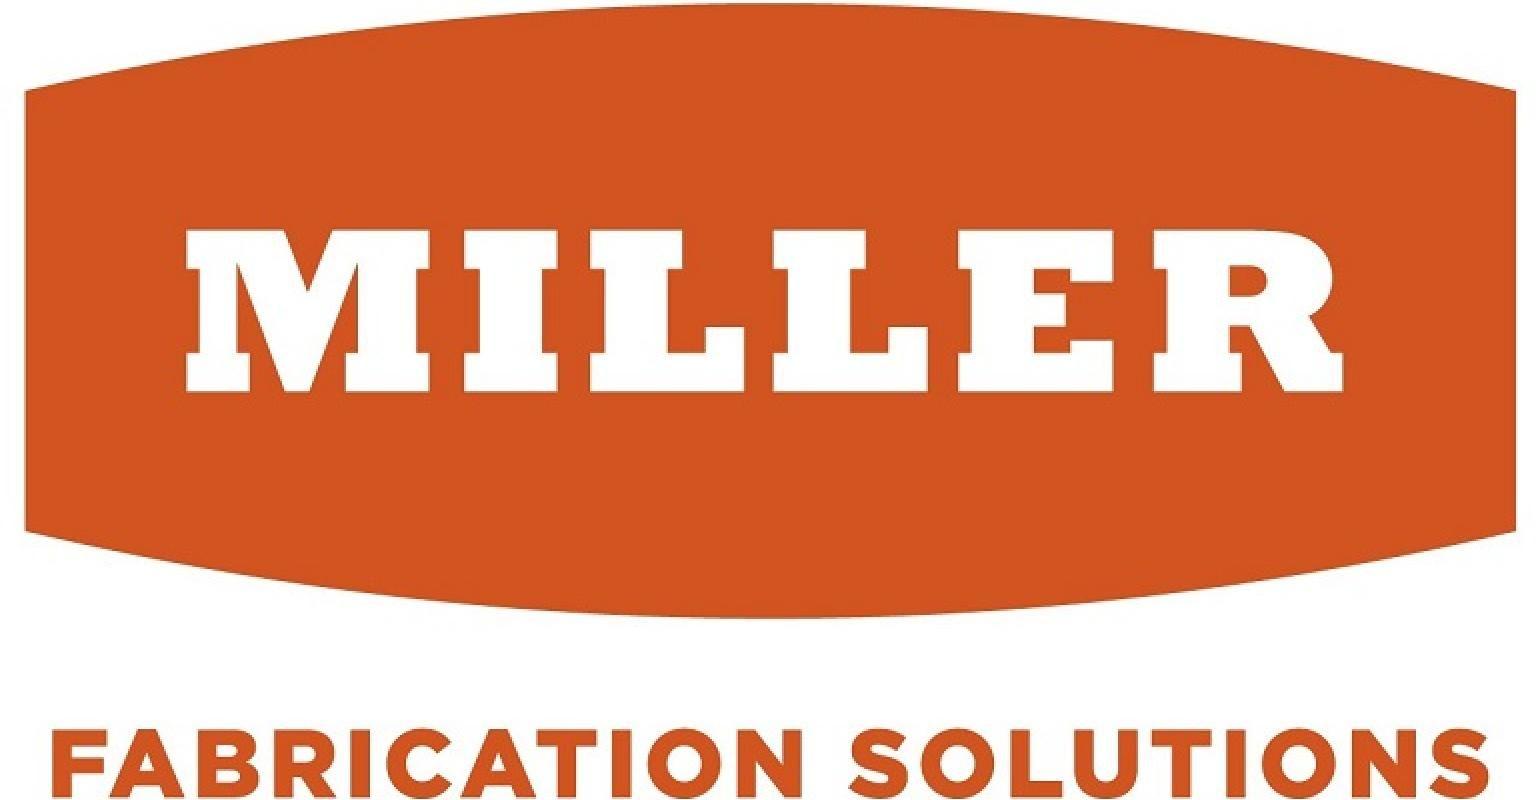 Orange and Blue Oval Logo - Miller rebrands – orange is the new blue | Trailer/Body Builders